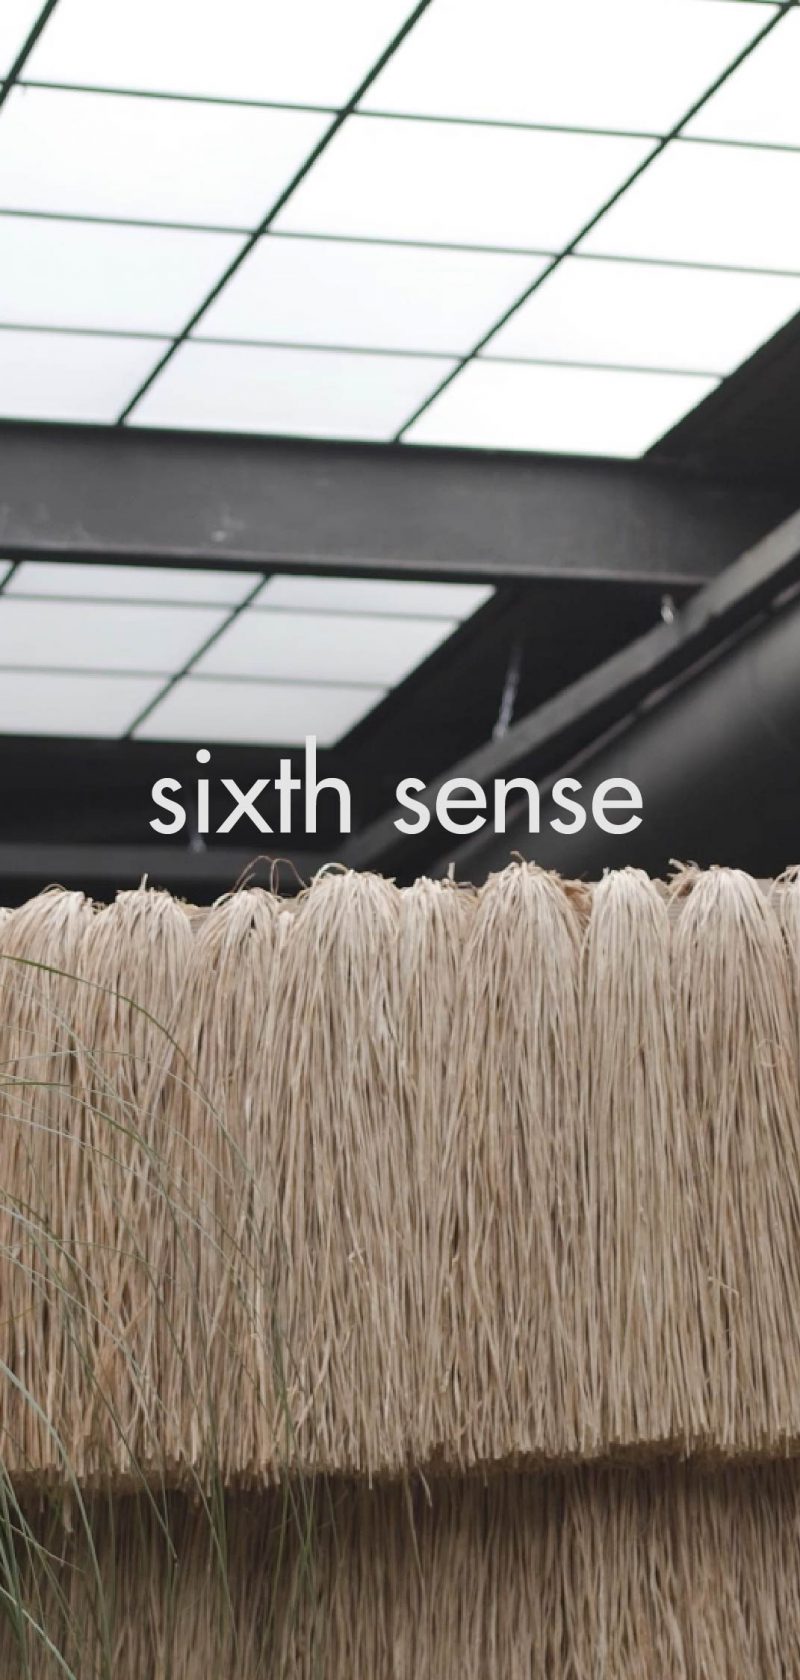 Sixth sense by Calé